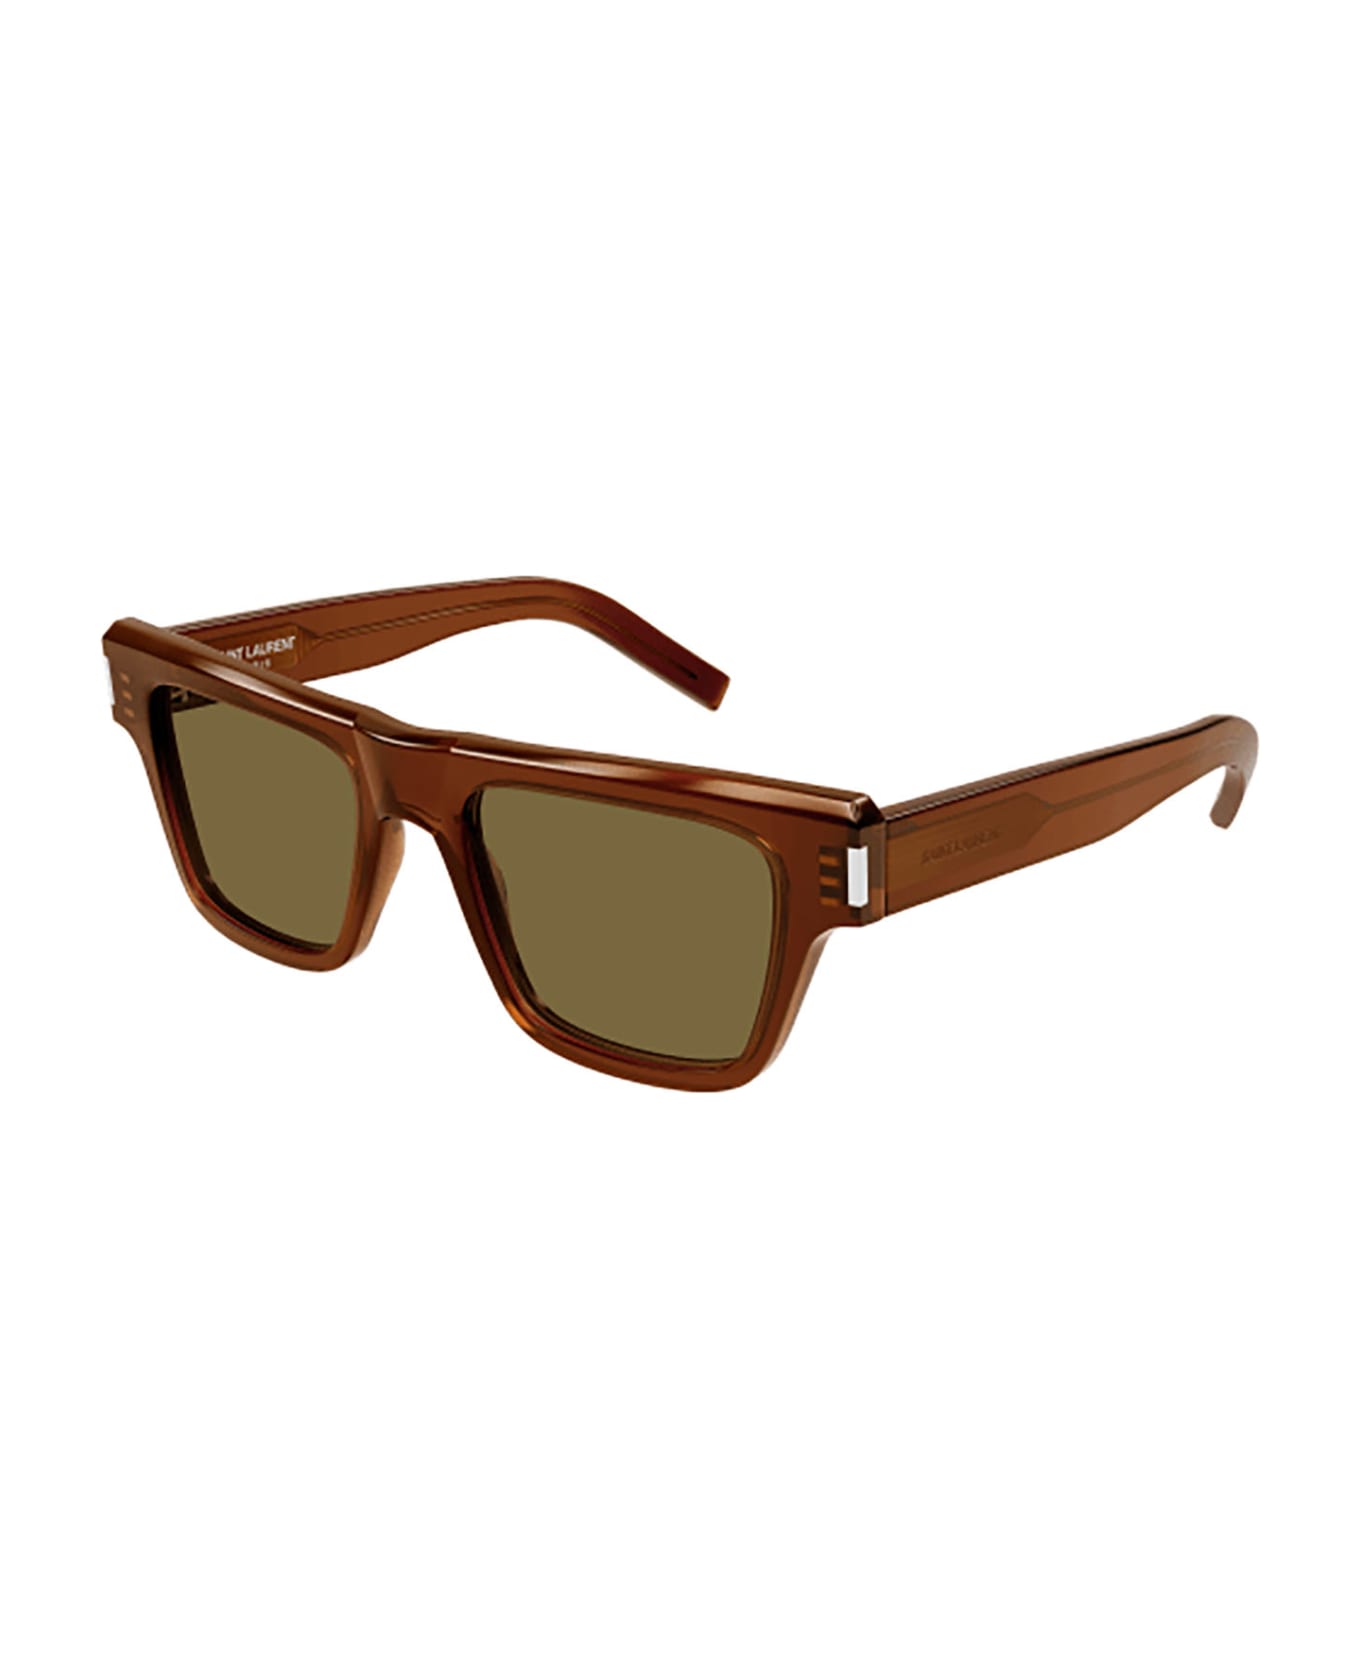 Saint Laurent Eyewear SL 469 Sunglasses tone - Only cat eye sunglasses tone in pearlescent white